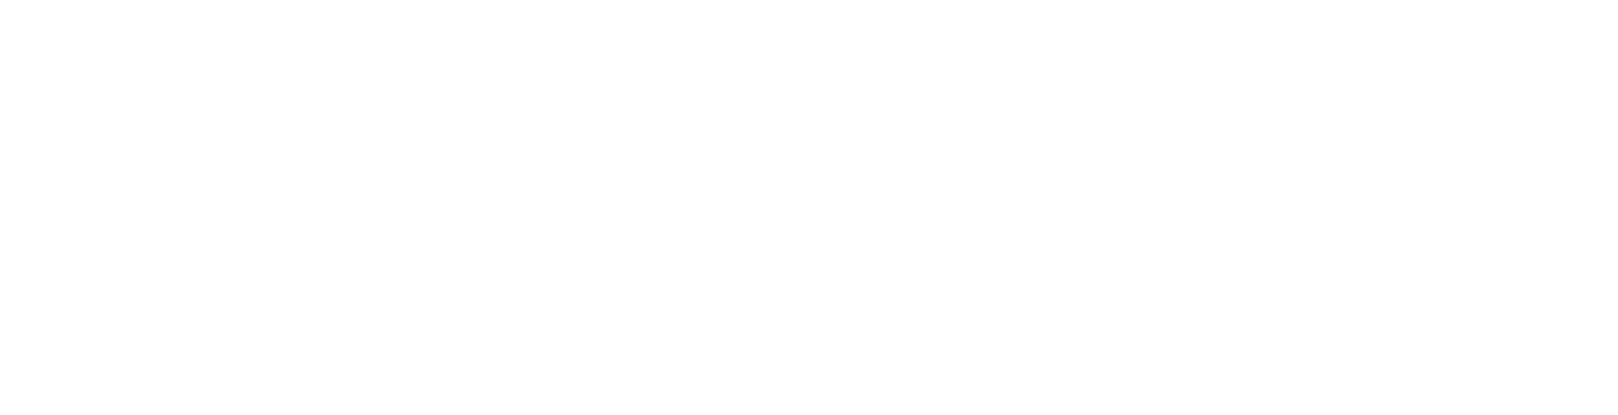 Silver Creek Inn